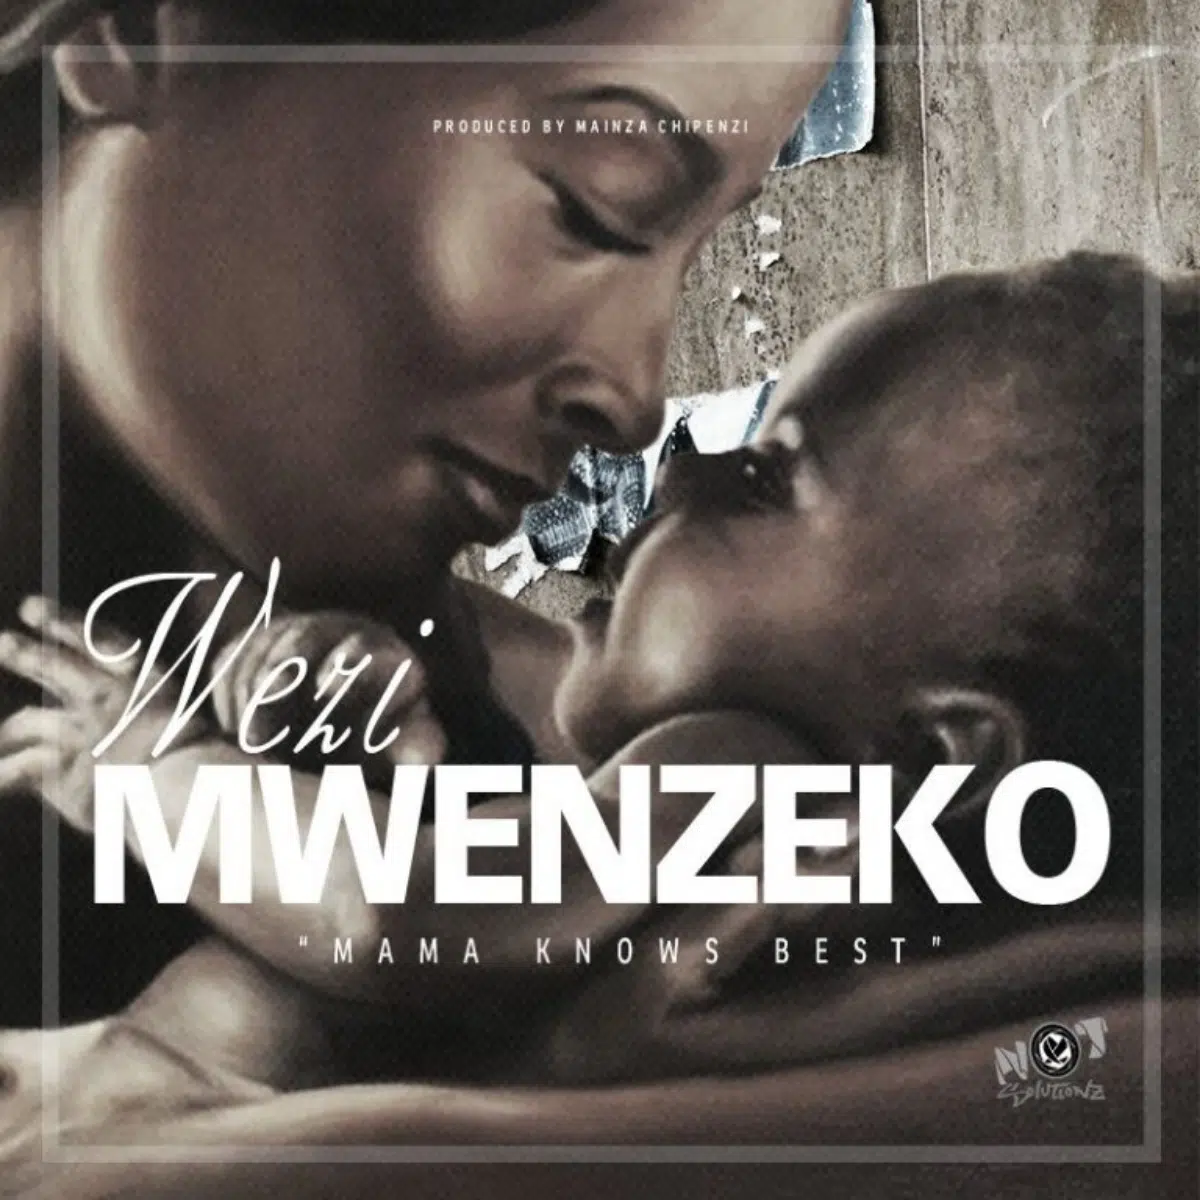 DOWNLOAD: Wezi – “Mwenzeko” (Mama Knows Best) Mp3